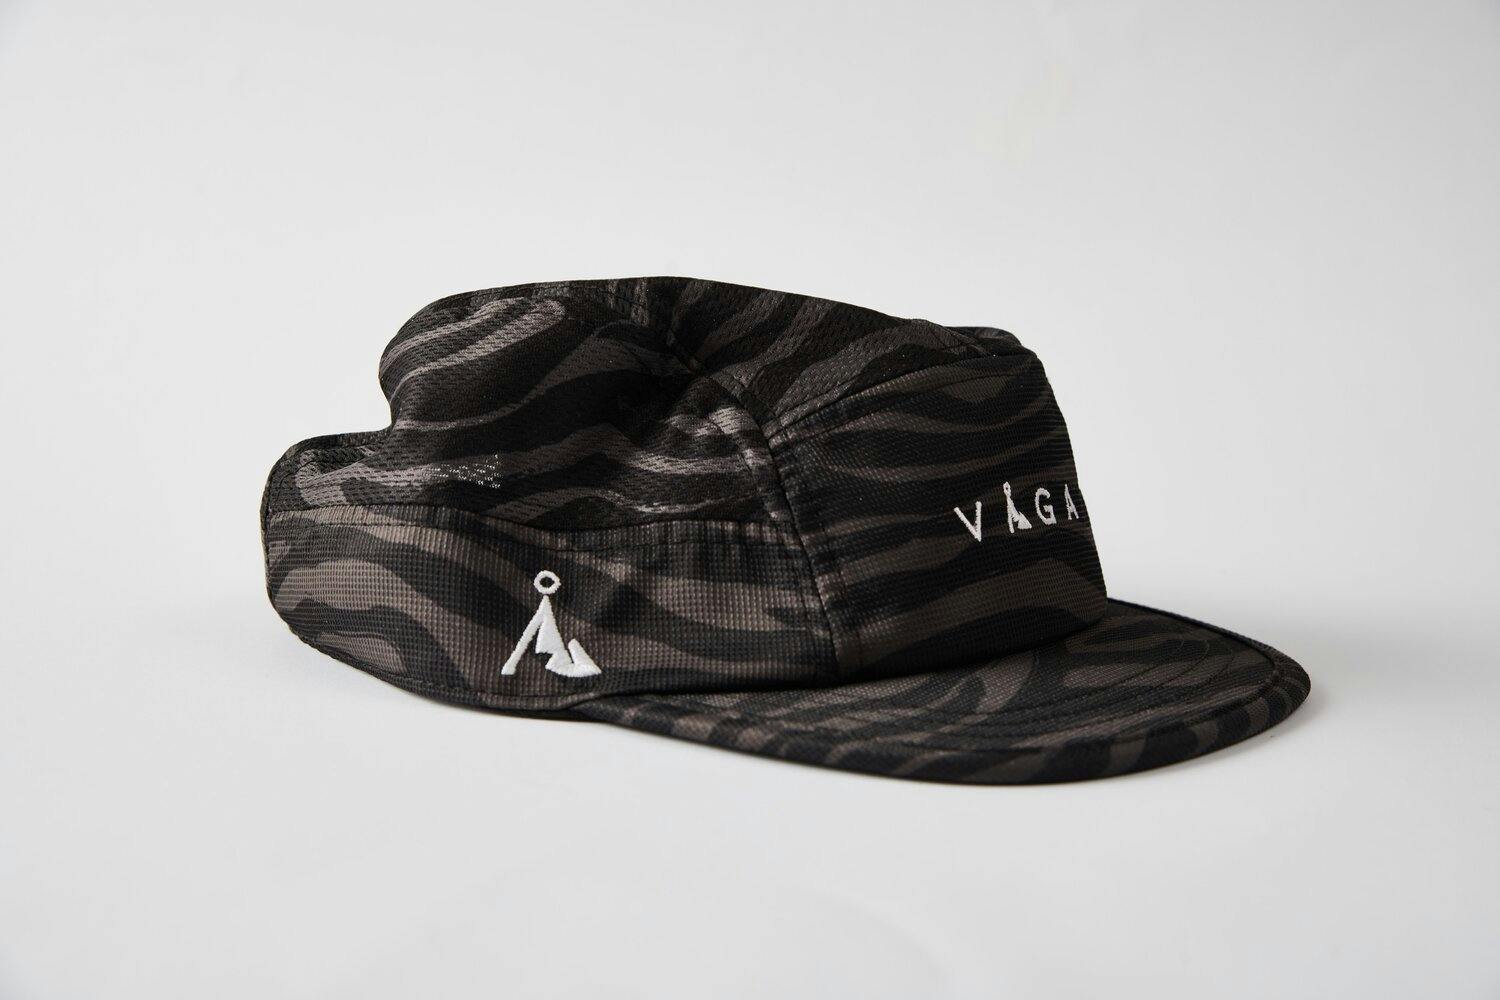 VÅGA Club Cap Limited Edition ZBR Charcoal/Black